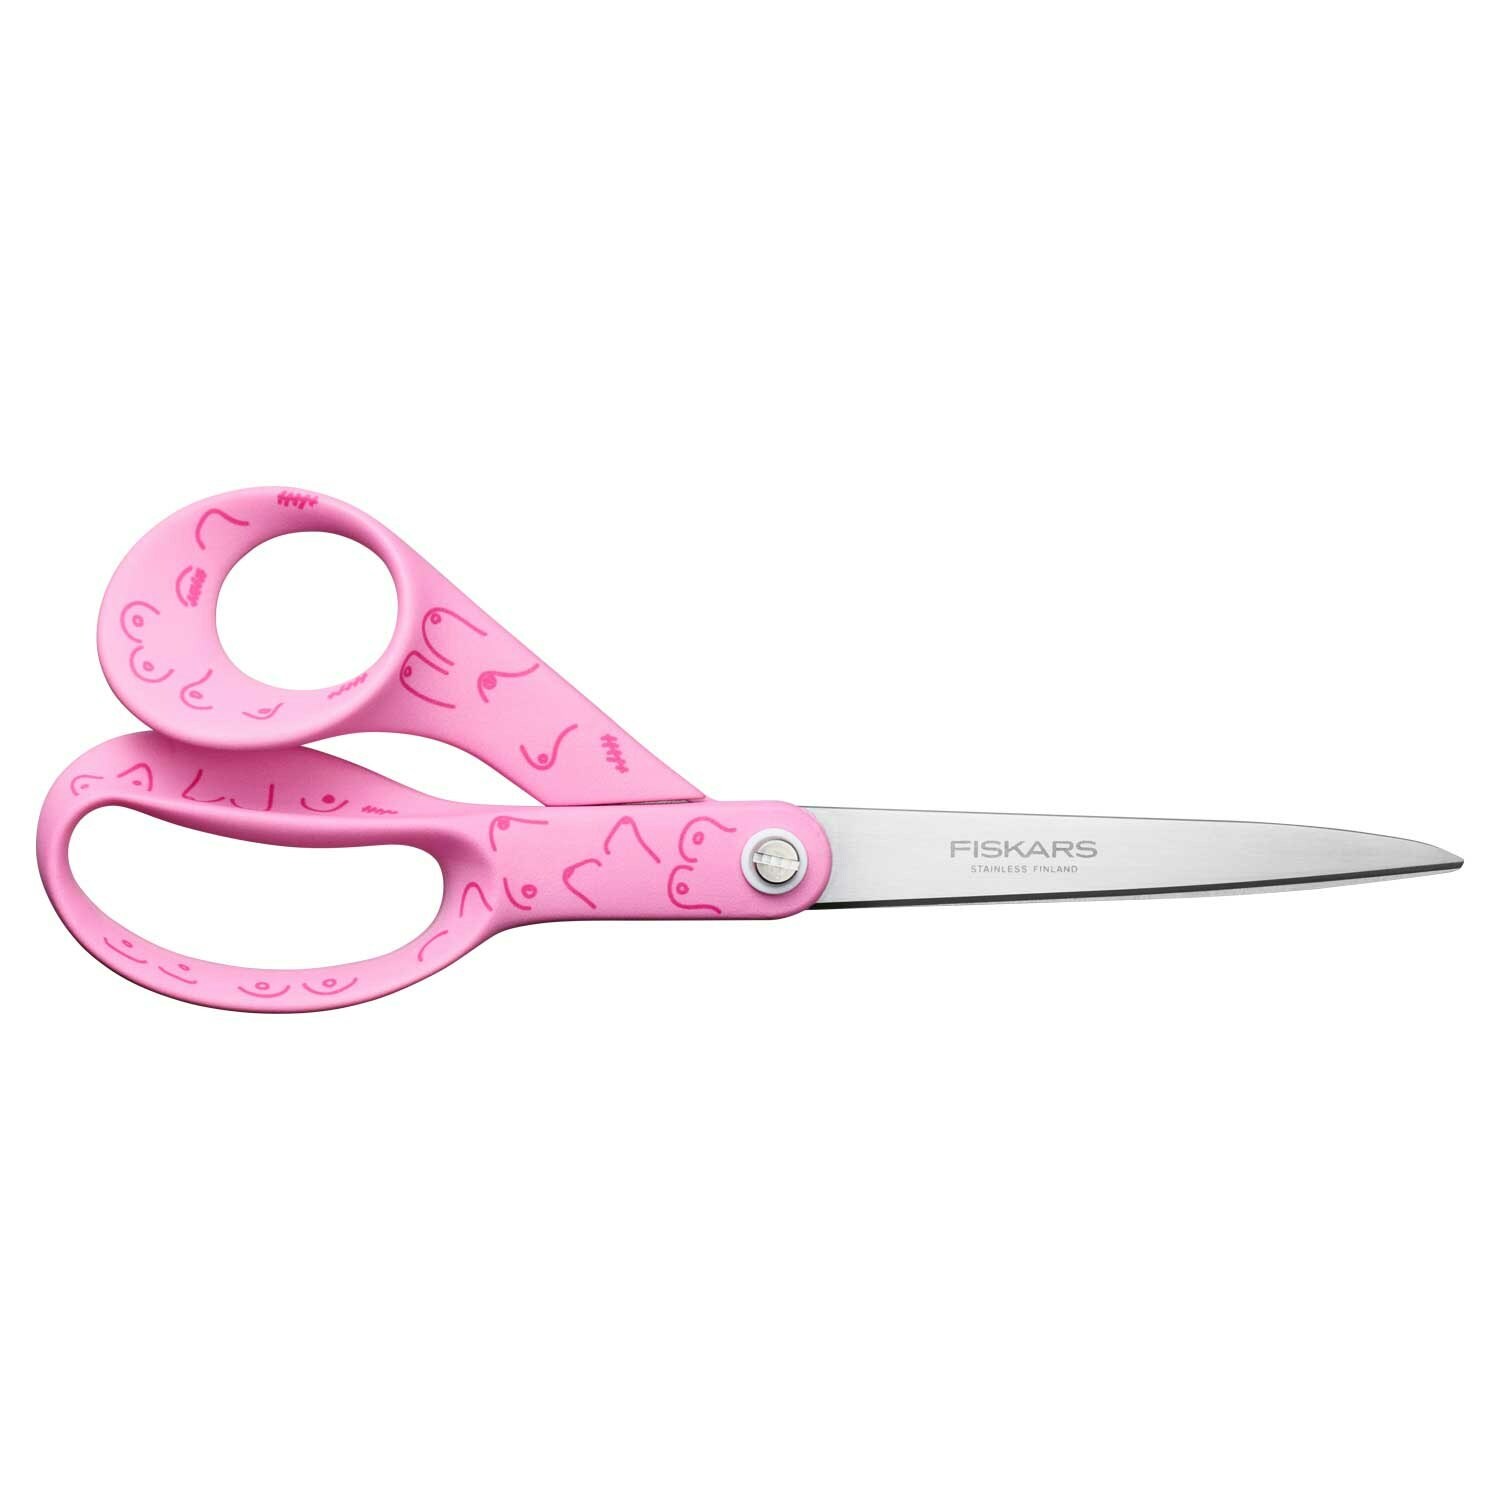 https://royaldesign.com/image/2/fiskars-universal-scissor-21-cm-pink-ribbon-1